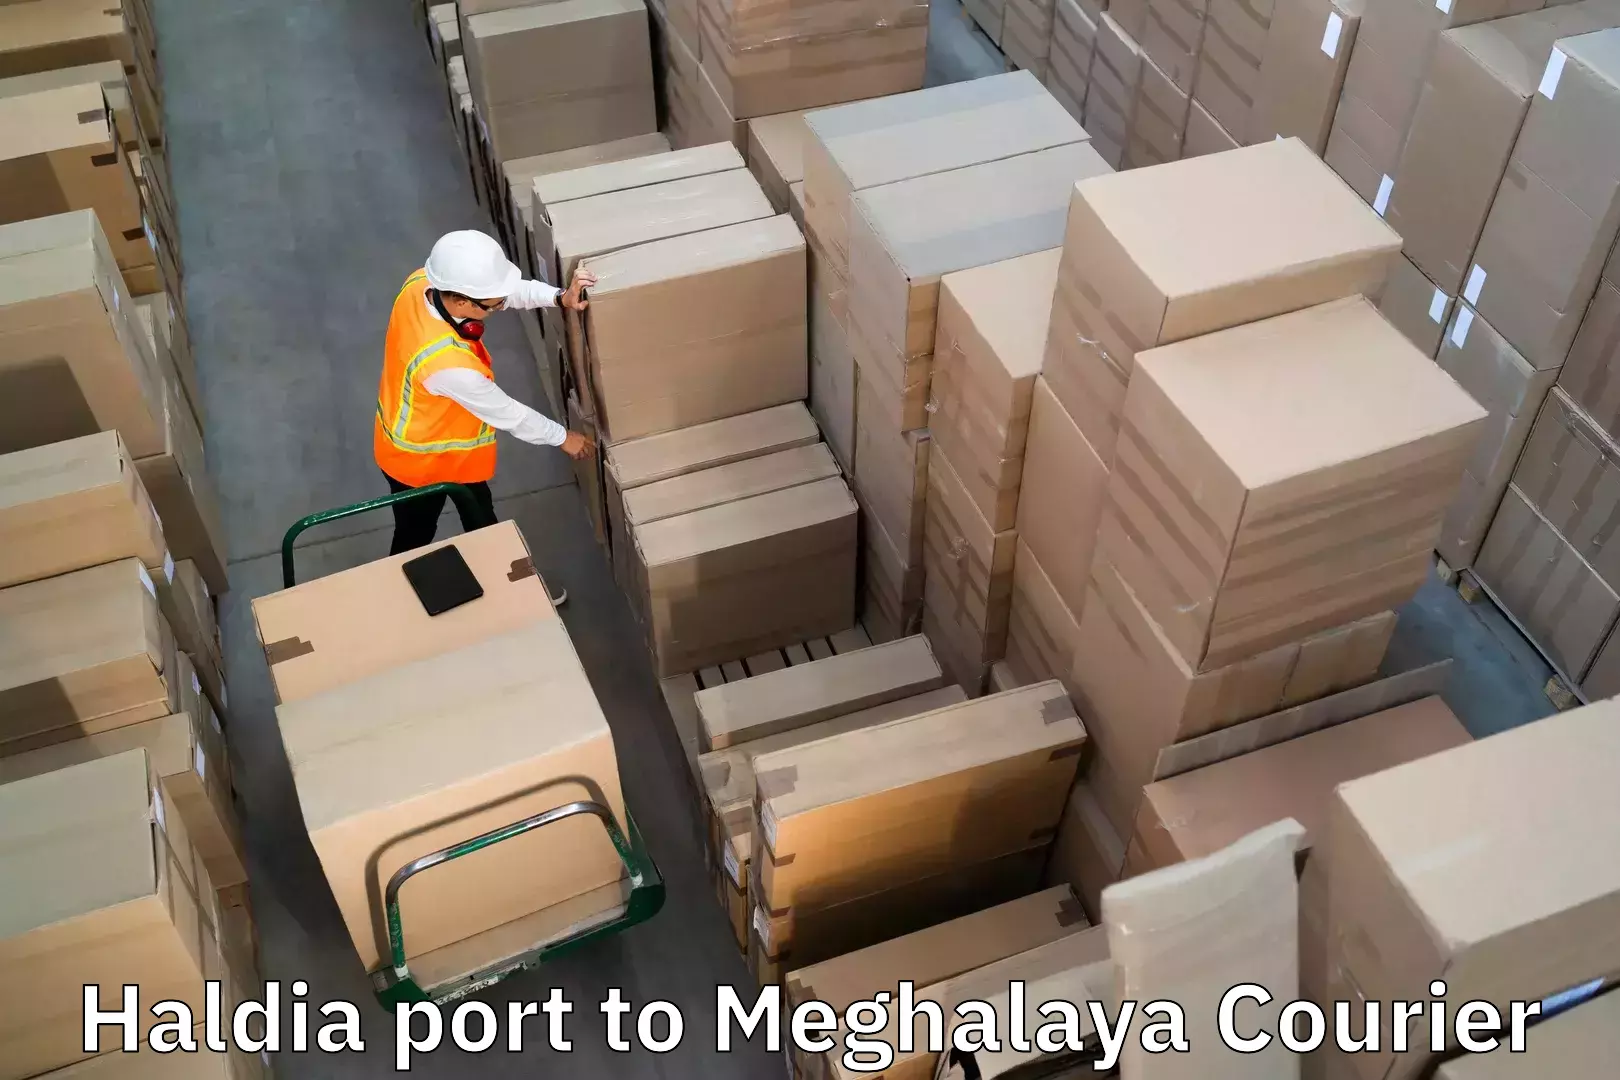 Luggage shipment specialists in Haldia port to Meghalaya